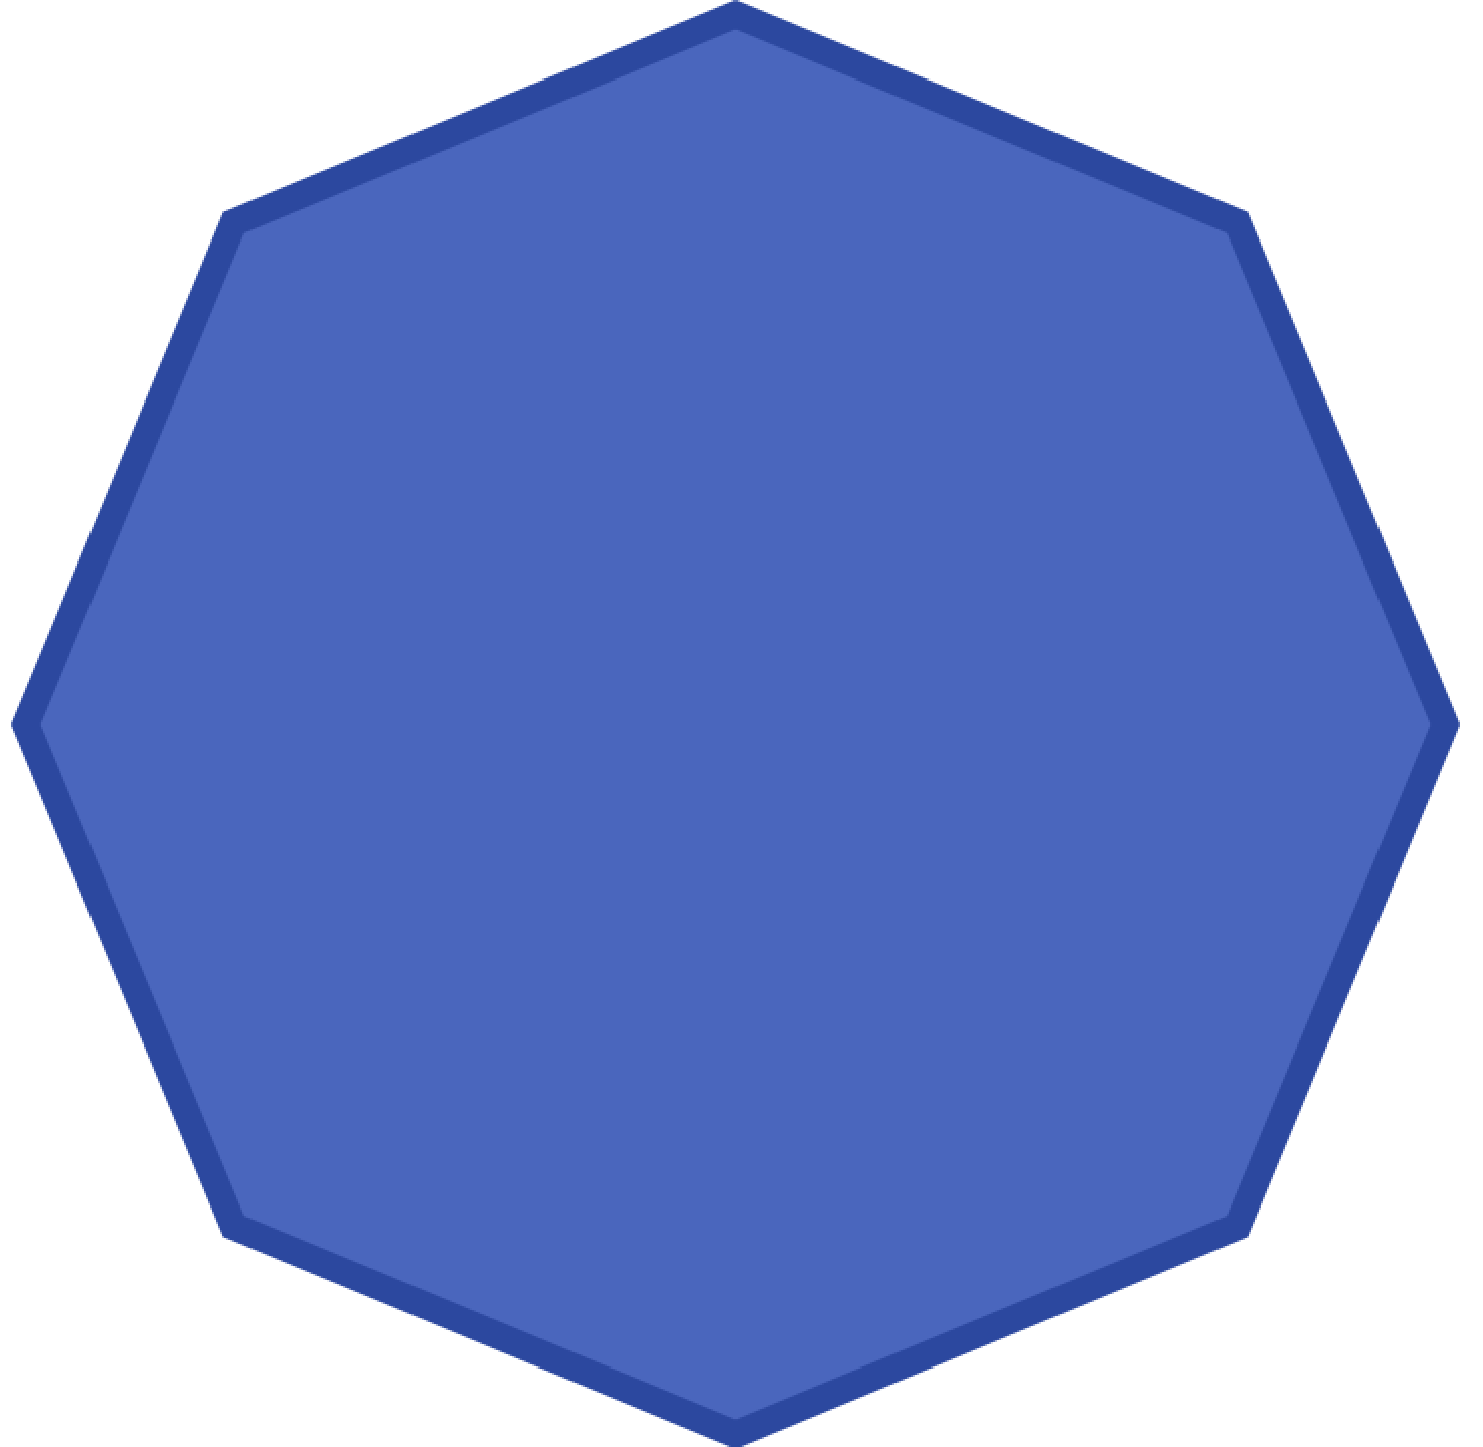 octagon shape